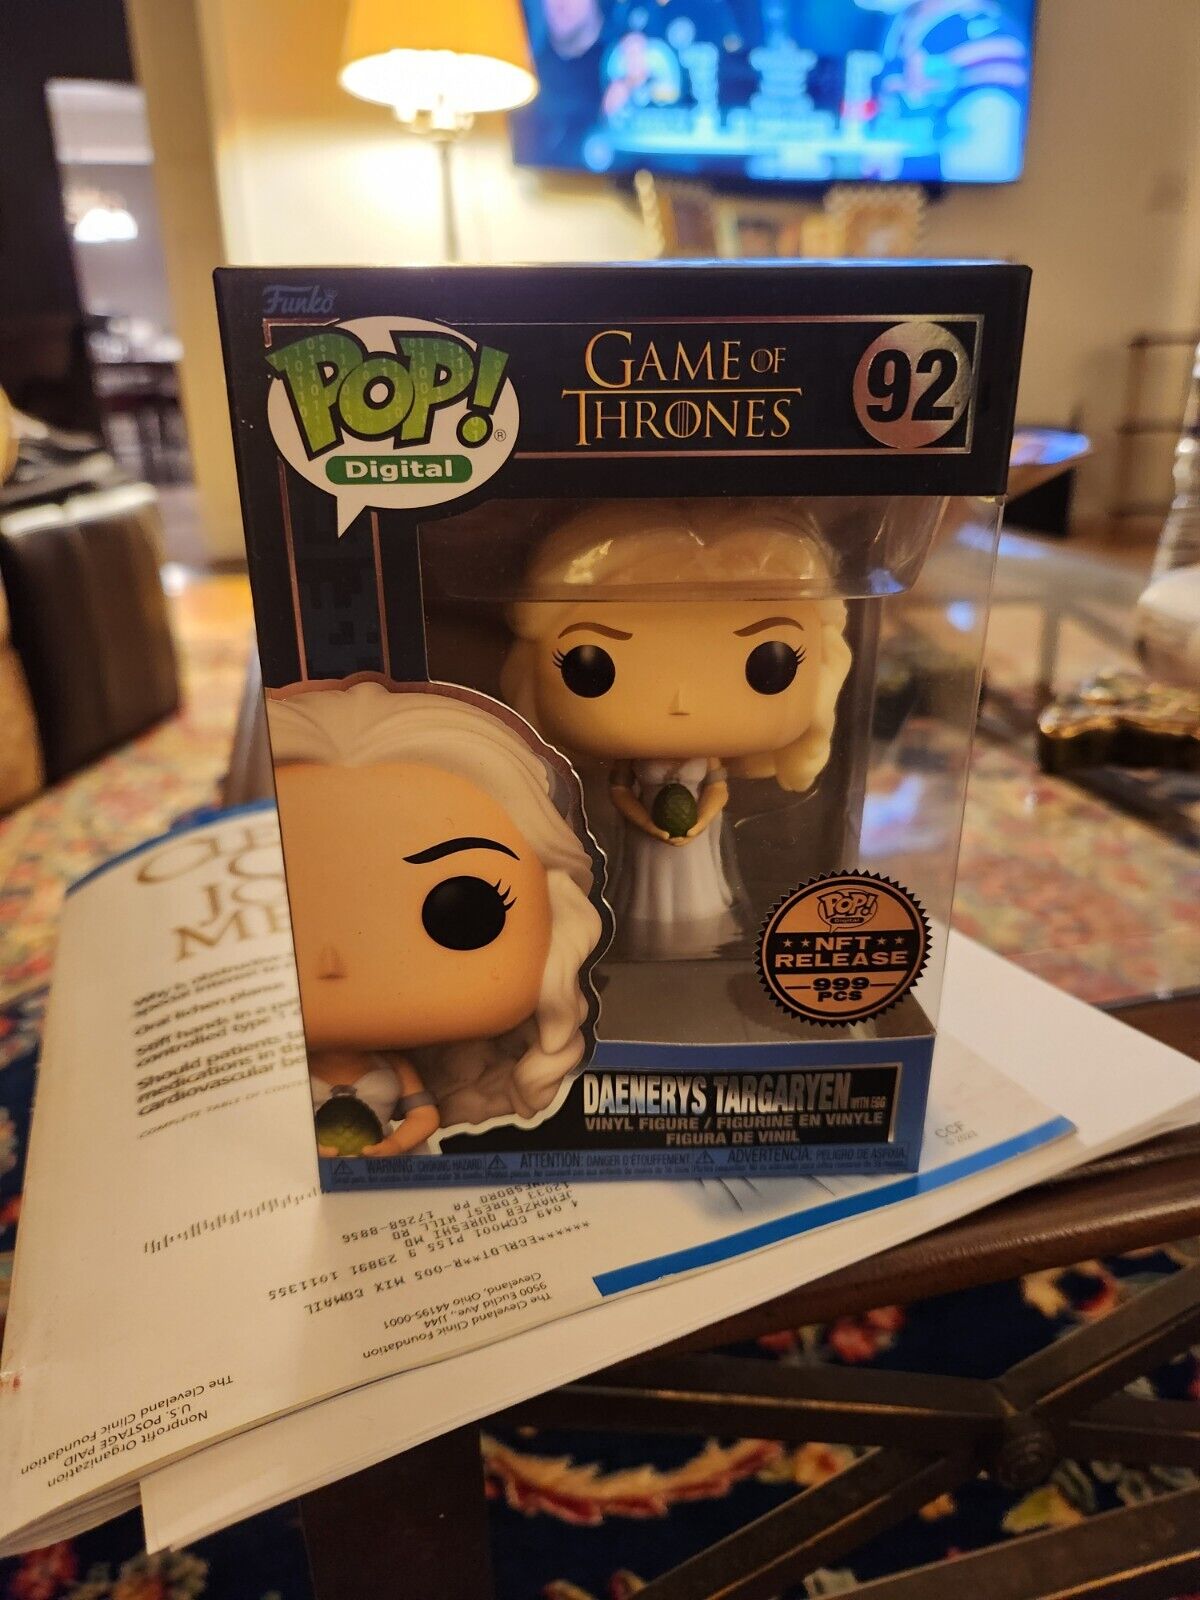 Daenerys Targaryen with Egg LE 999 Grail Funko Pop Digital Game of Thrones